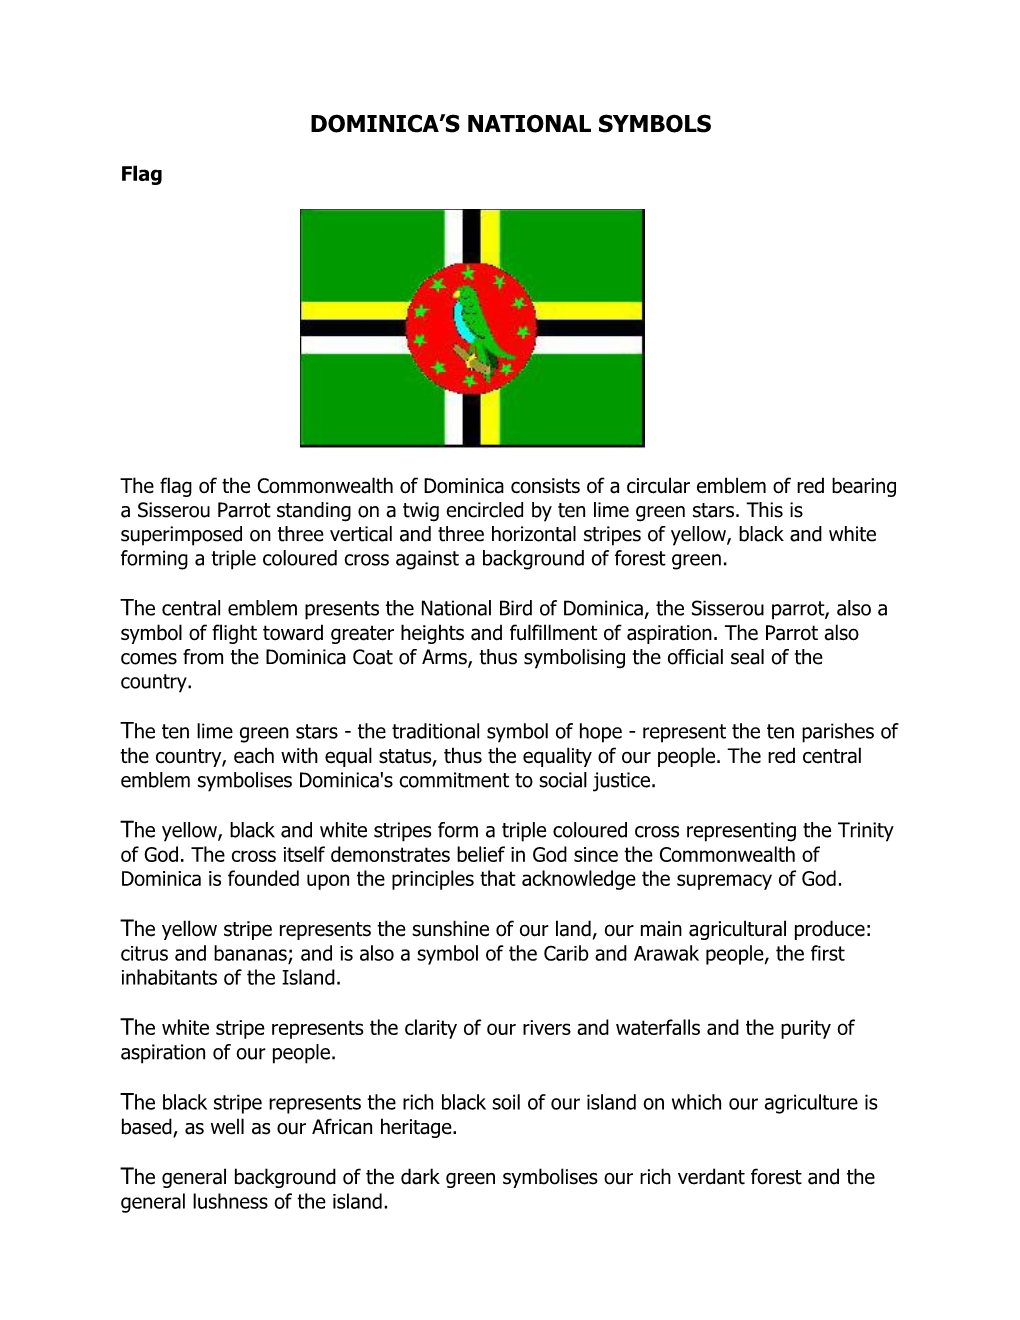 Dominica's National Symbols